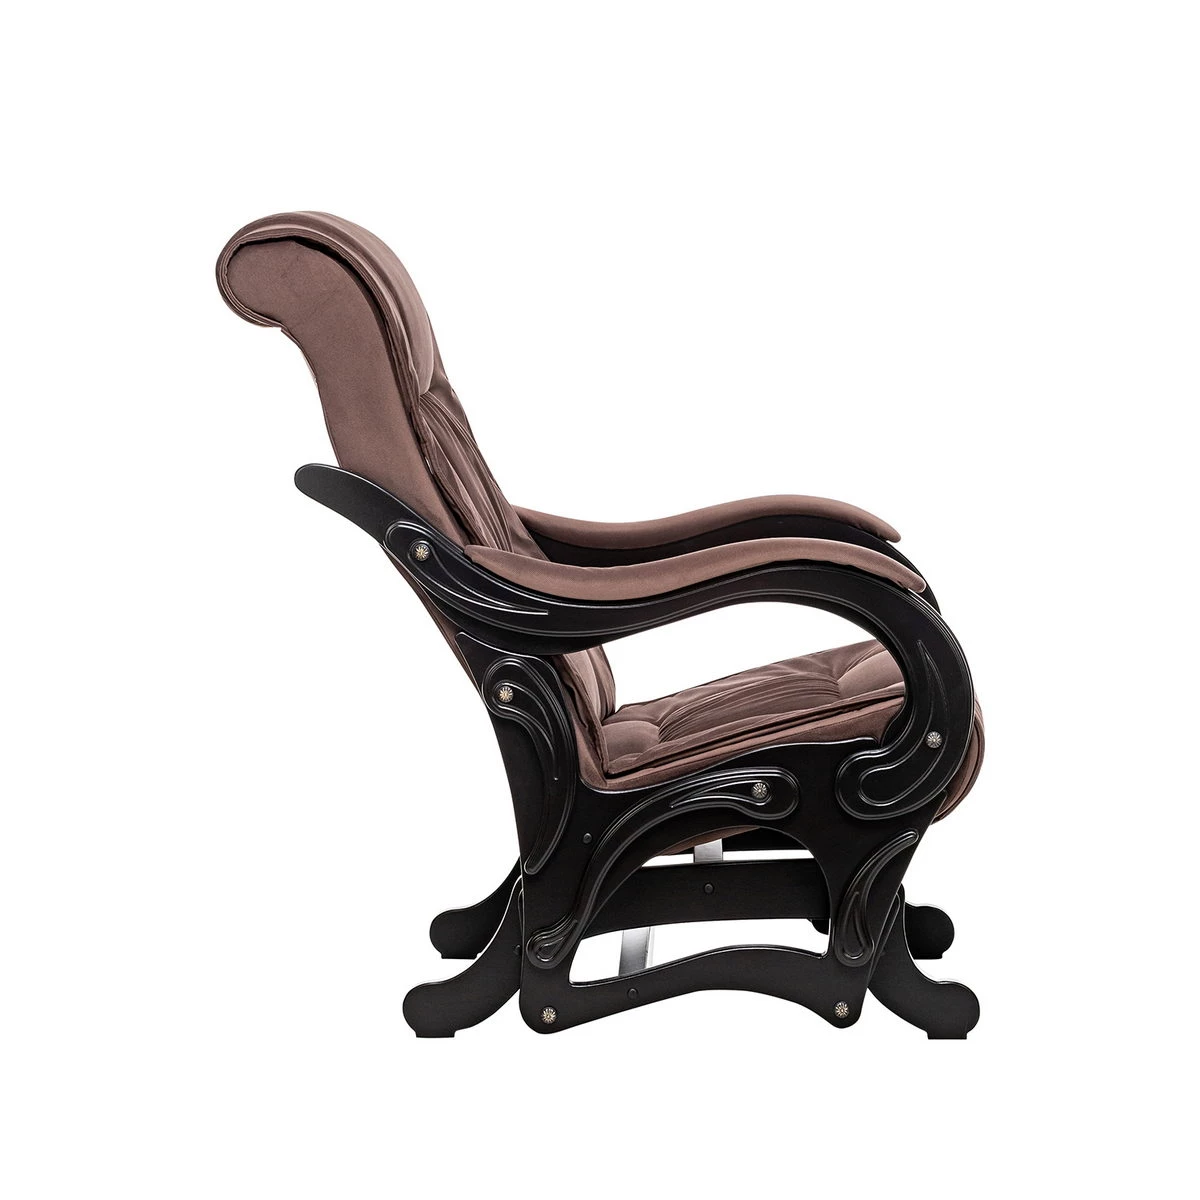 Кресло-глайдер Модель 78 (Импэкс). Цвет каркаса: Венге; Цвет обивки: Maxx 235